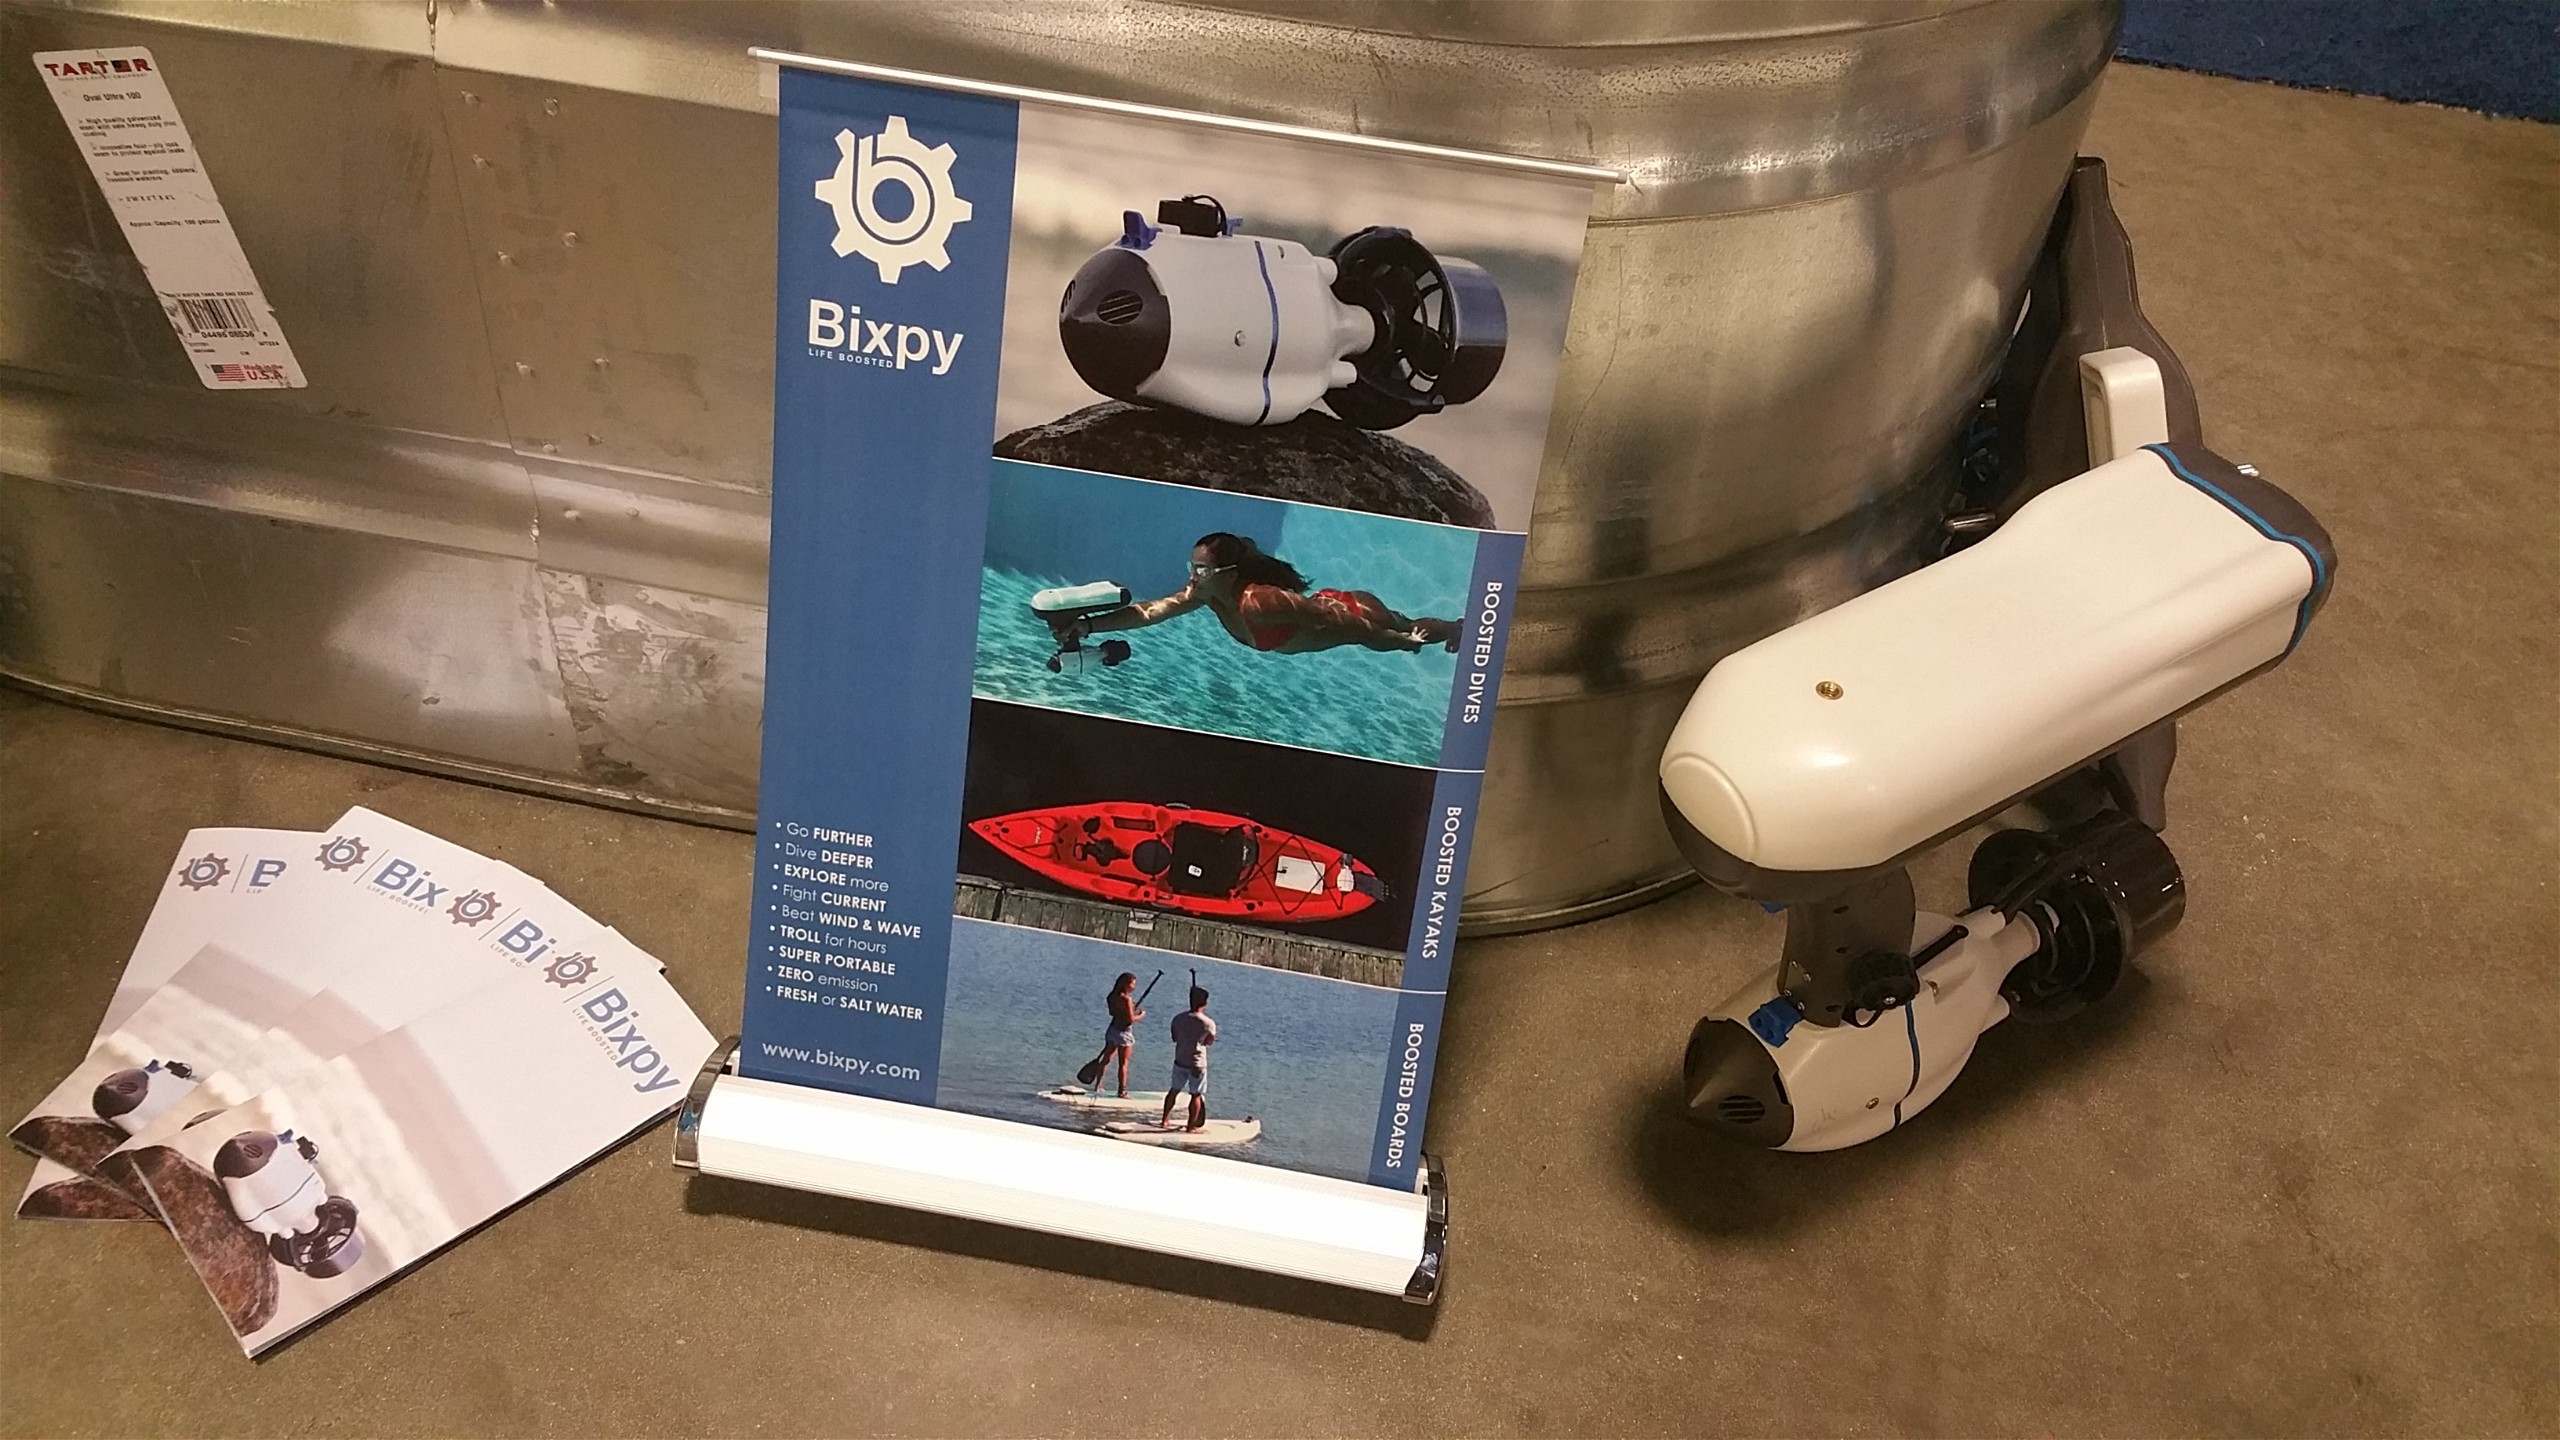 Bixby Swim Jet at Blue Wild 2018